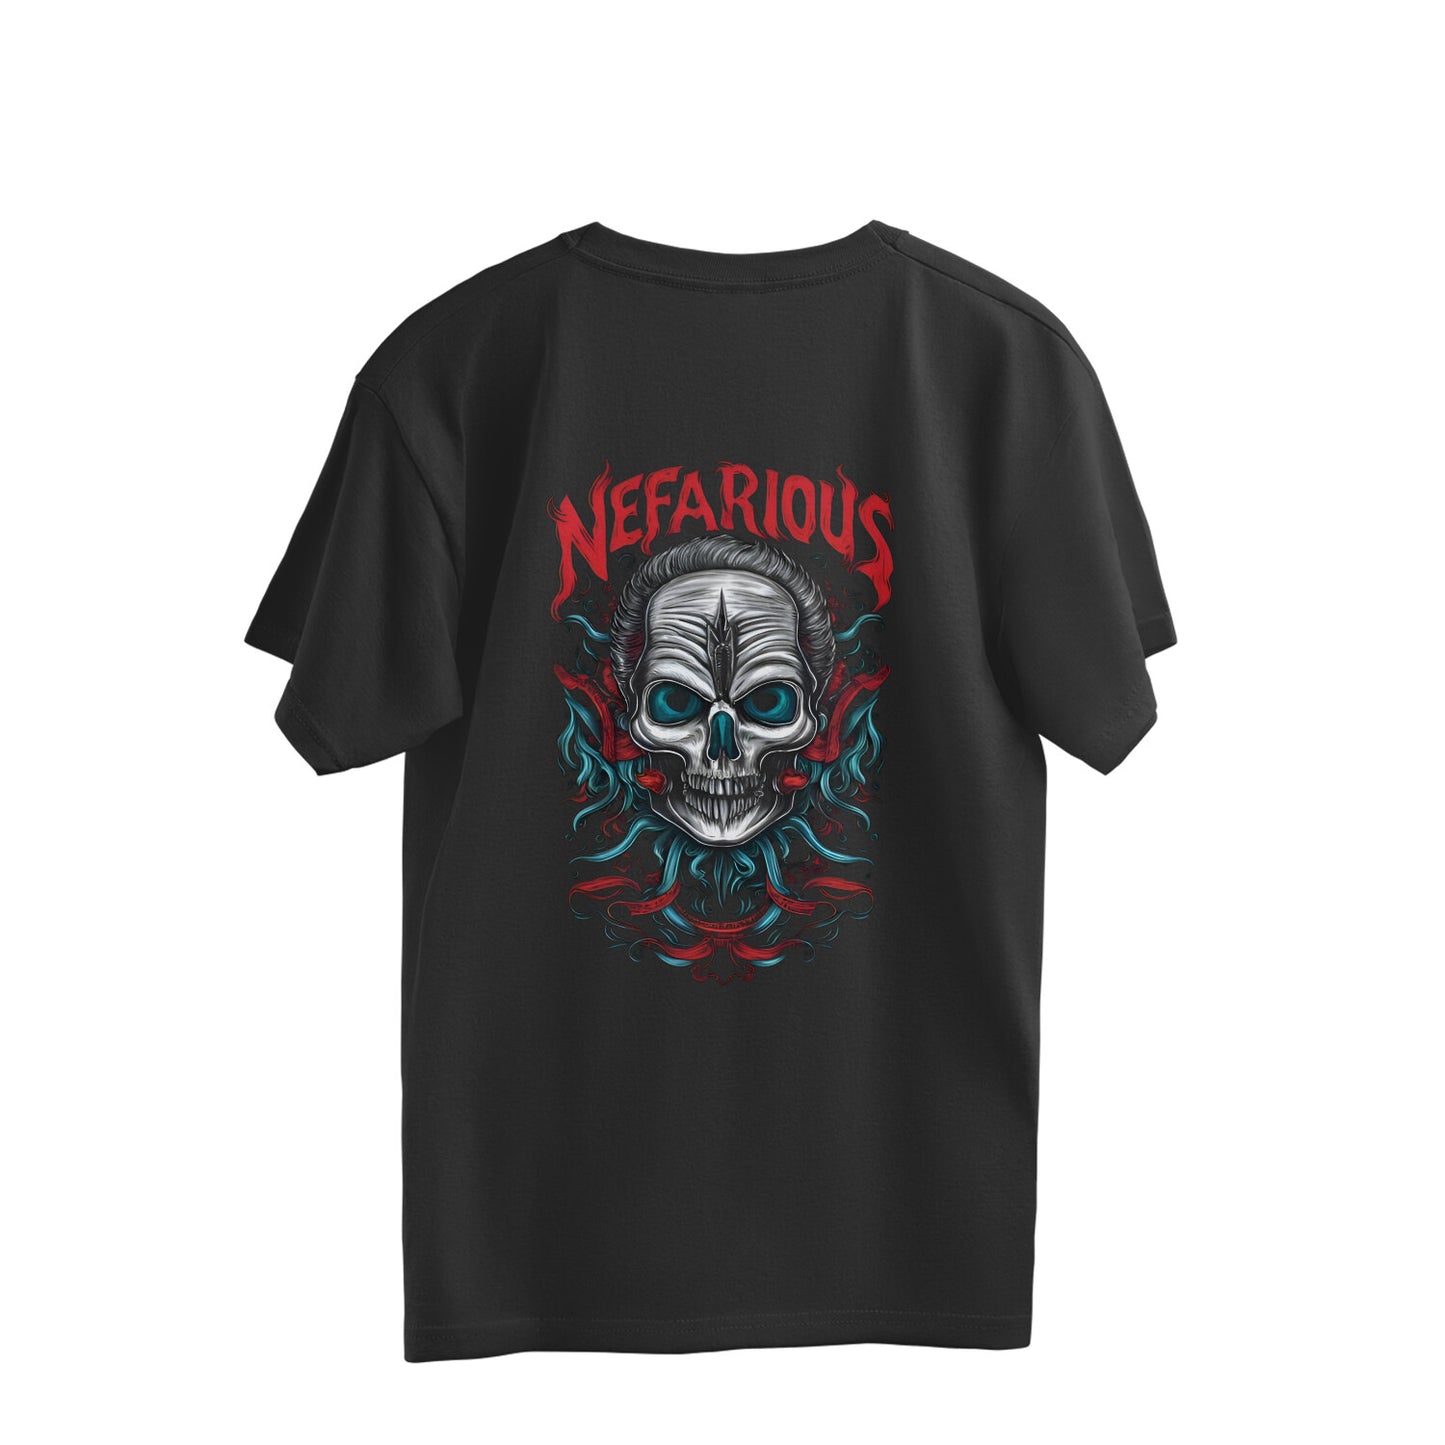 Nefarious - Oversized T-shirt